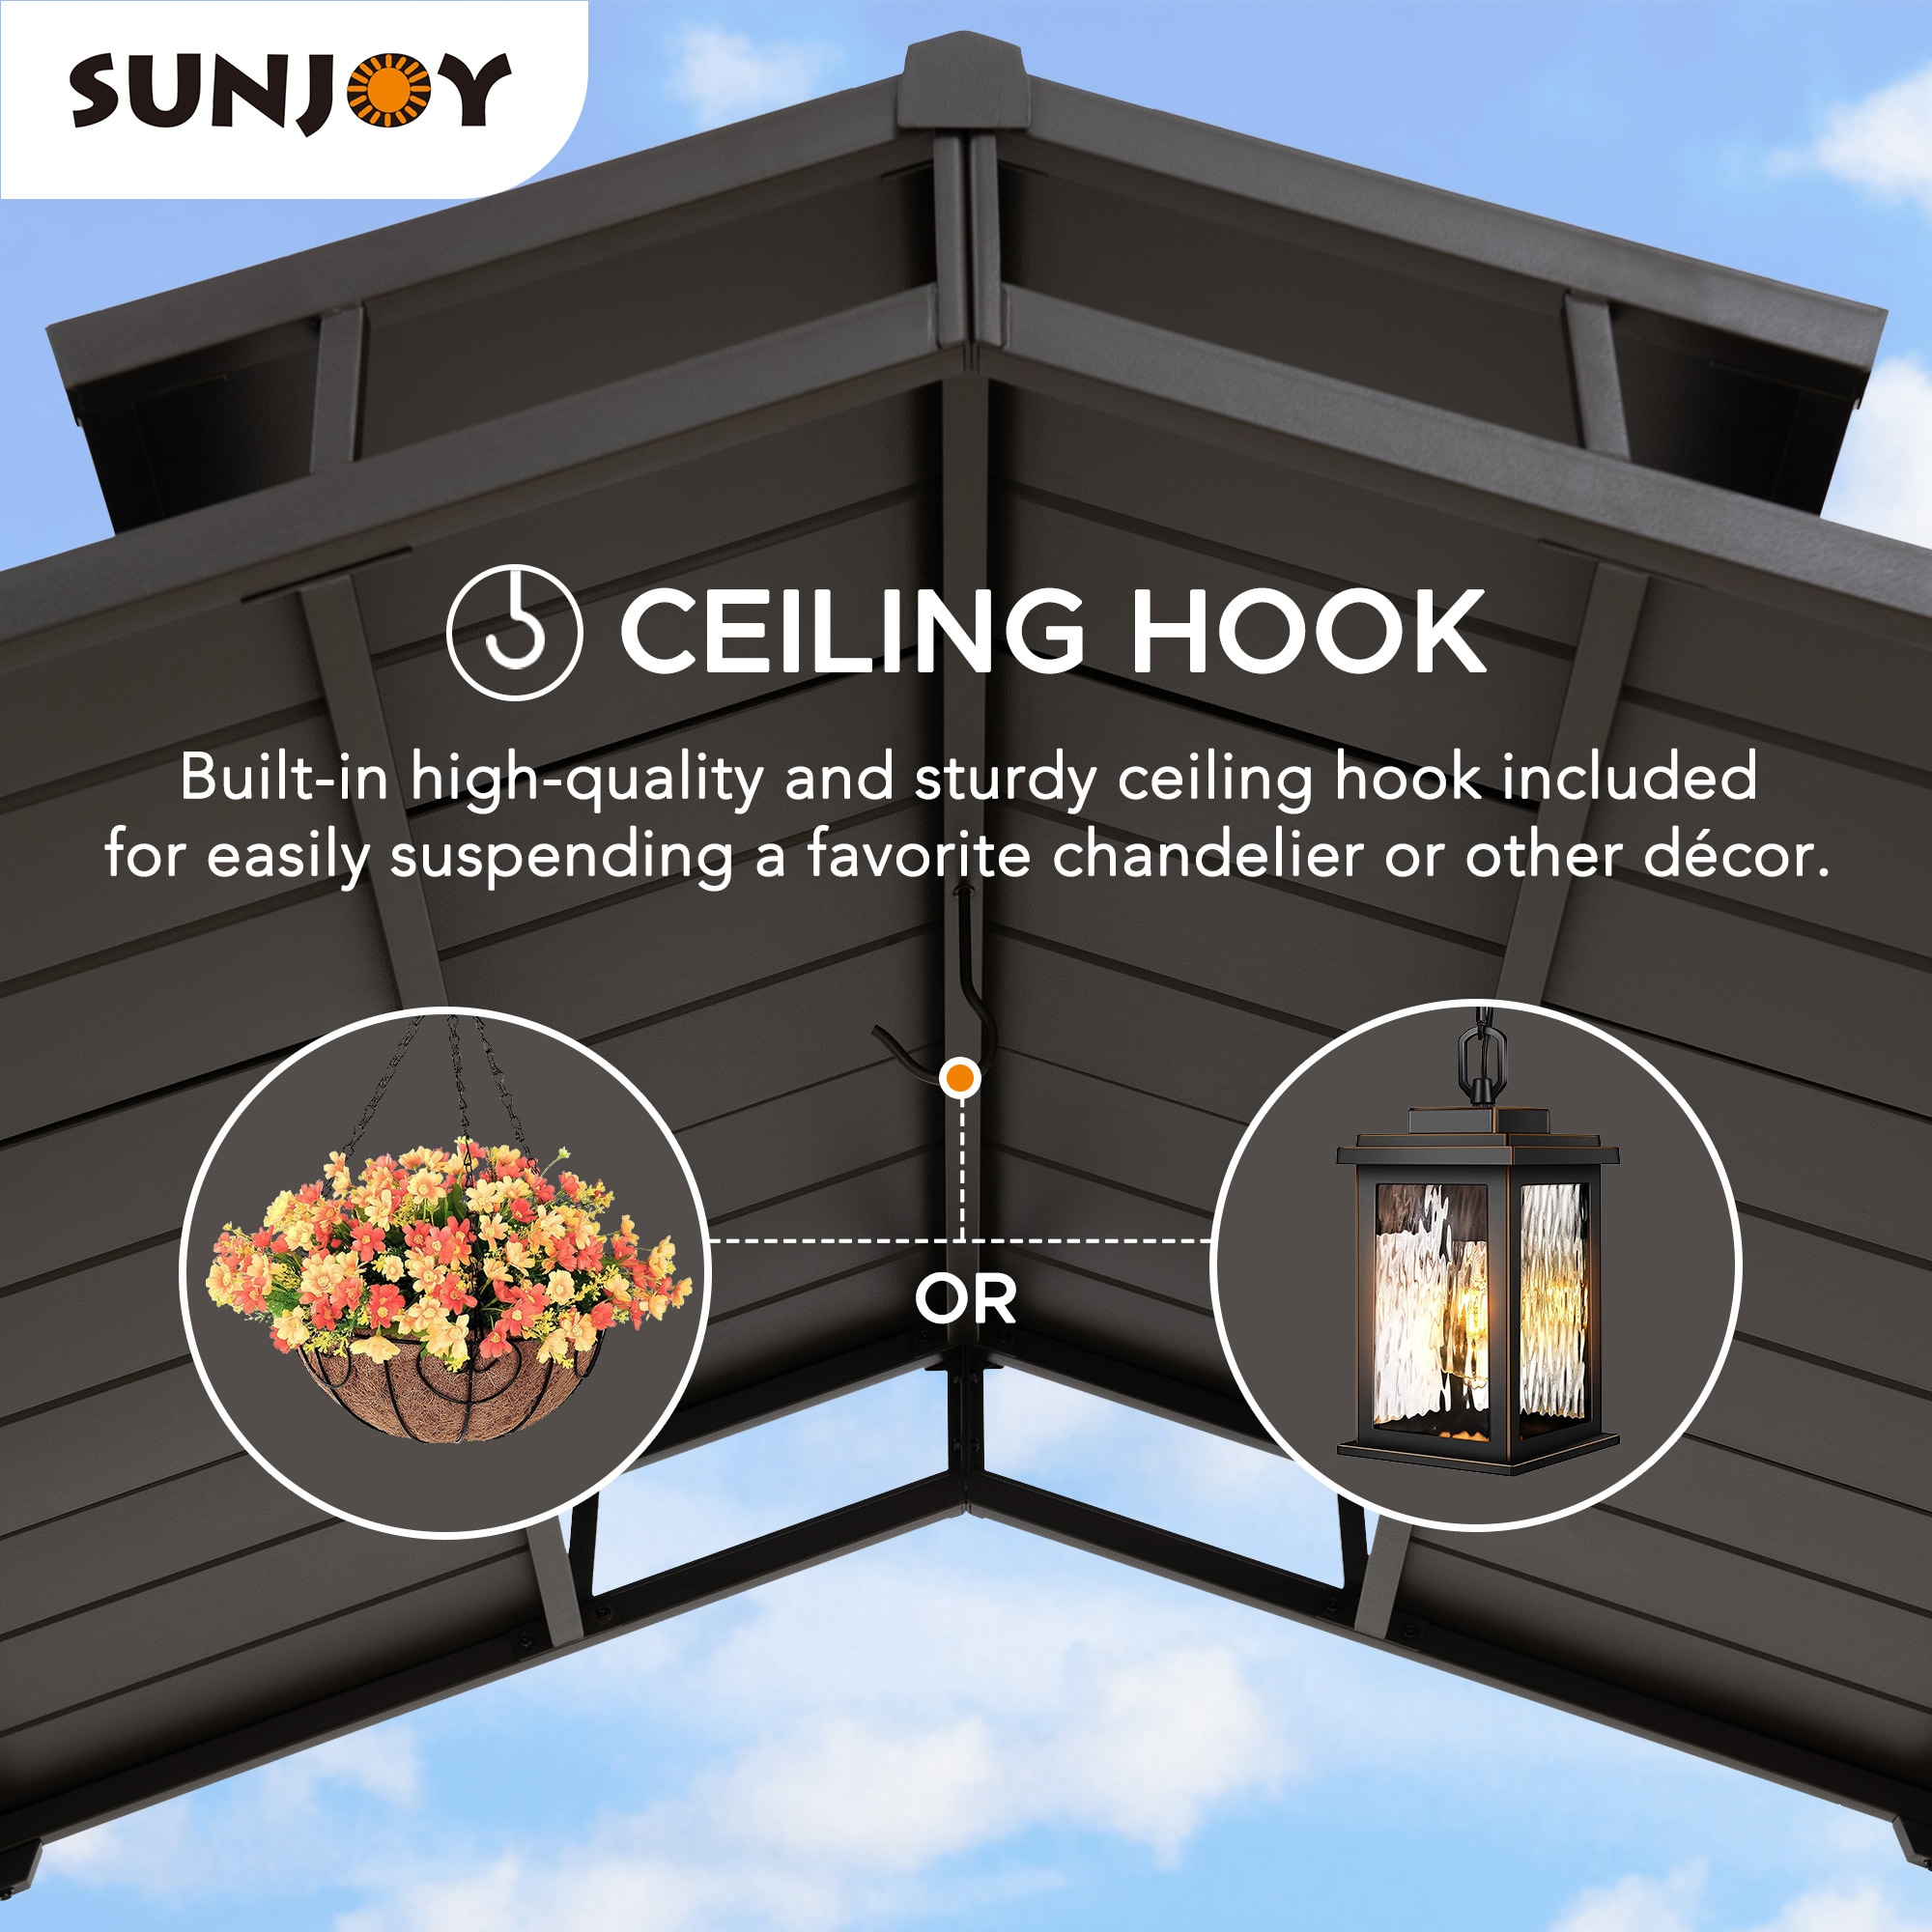 Sunjoy Black Hanging Storage Wall Shelf with Hooks